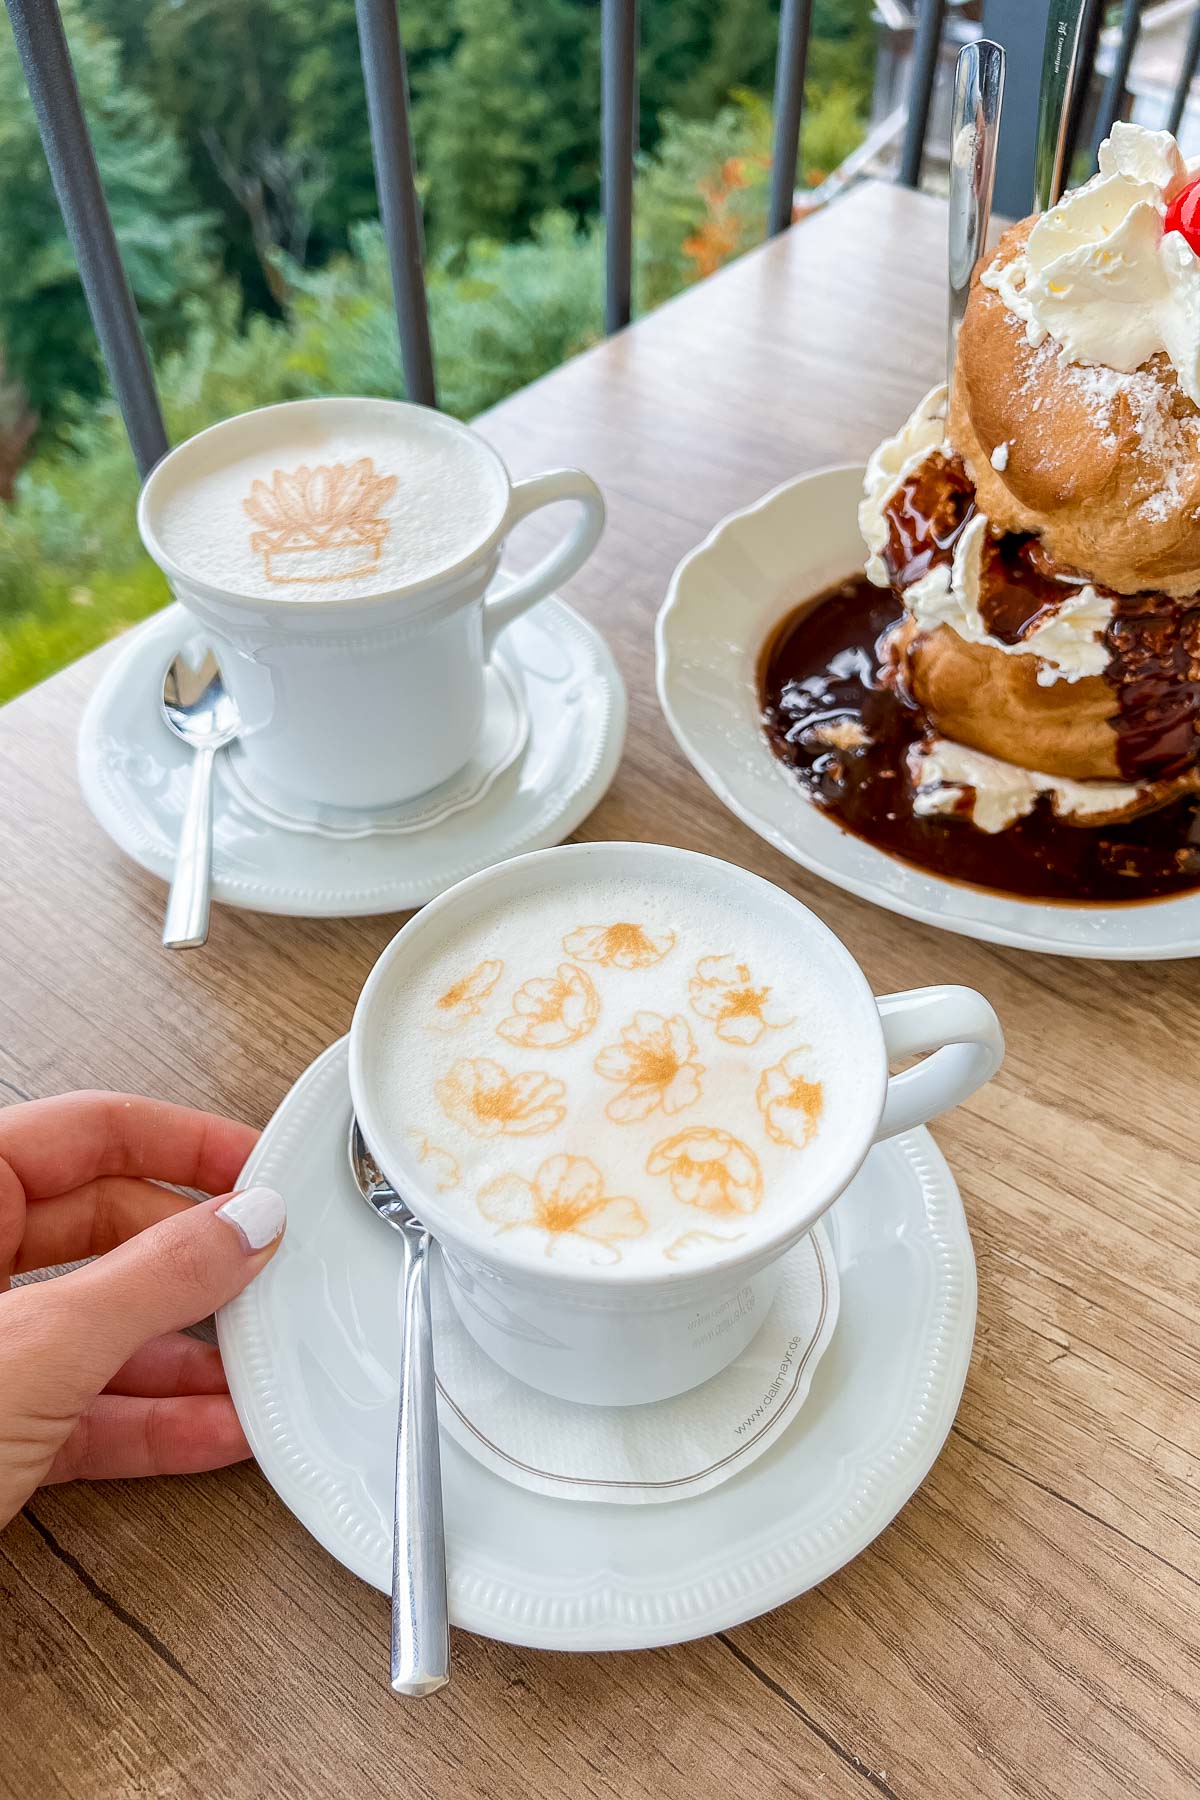 Coffee and cake at Restaurant Café Graflhöhe Windbeutelbaron, Berchtesgaden